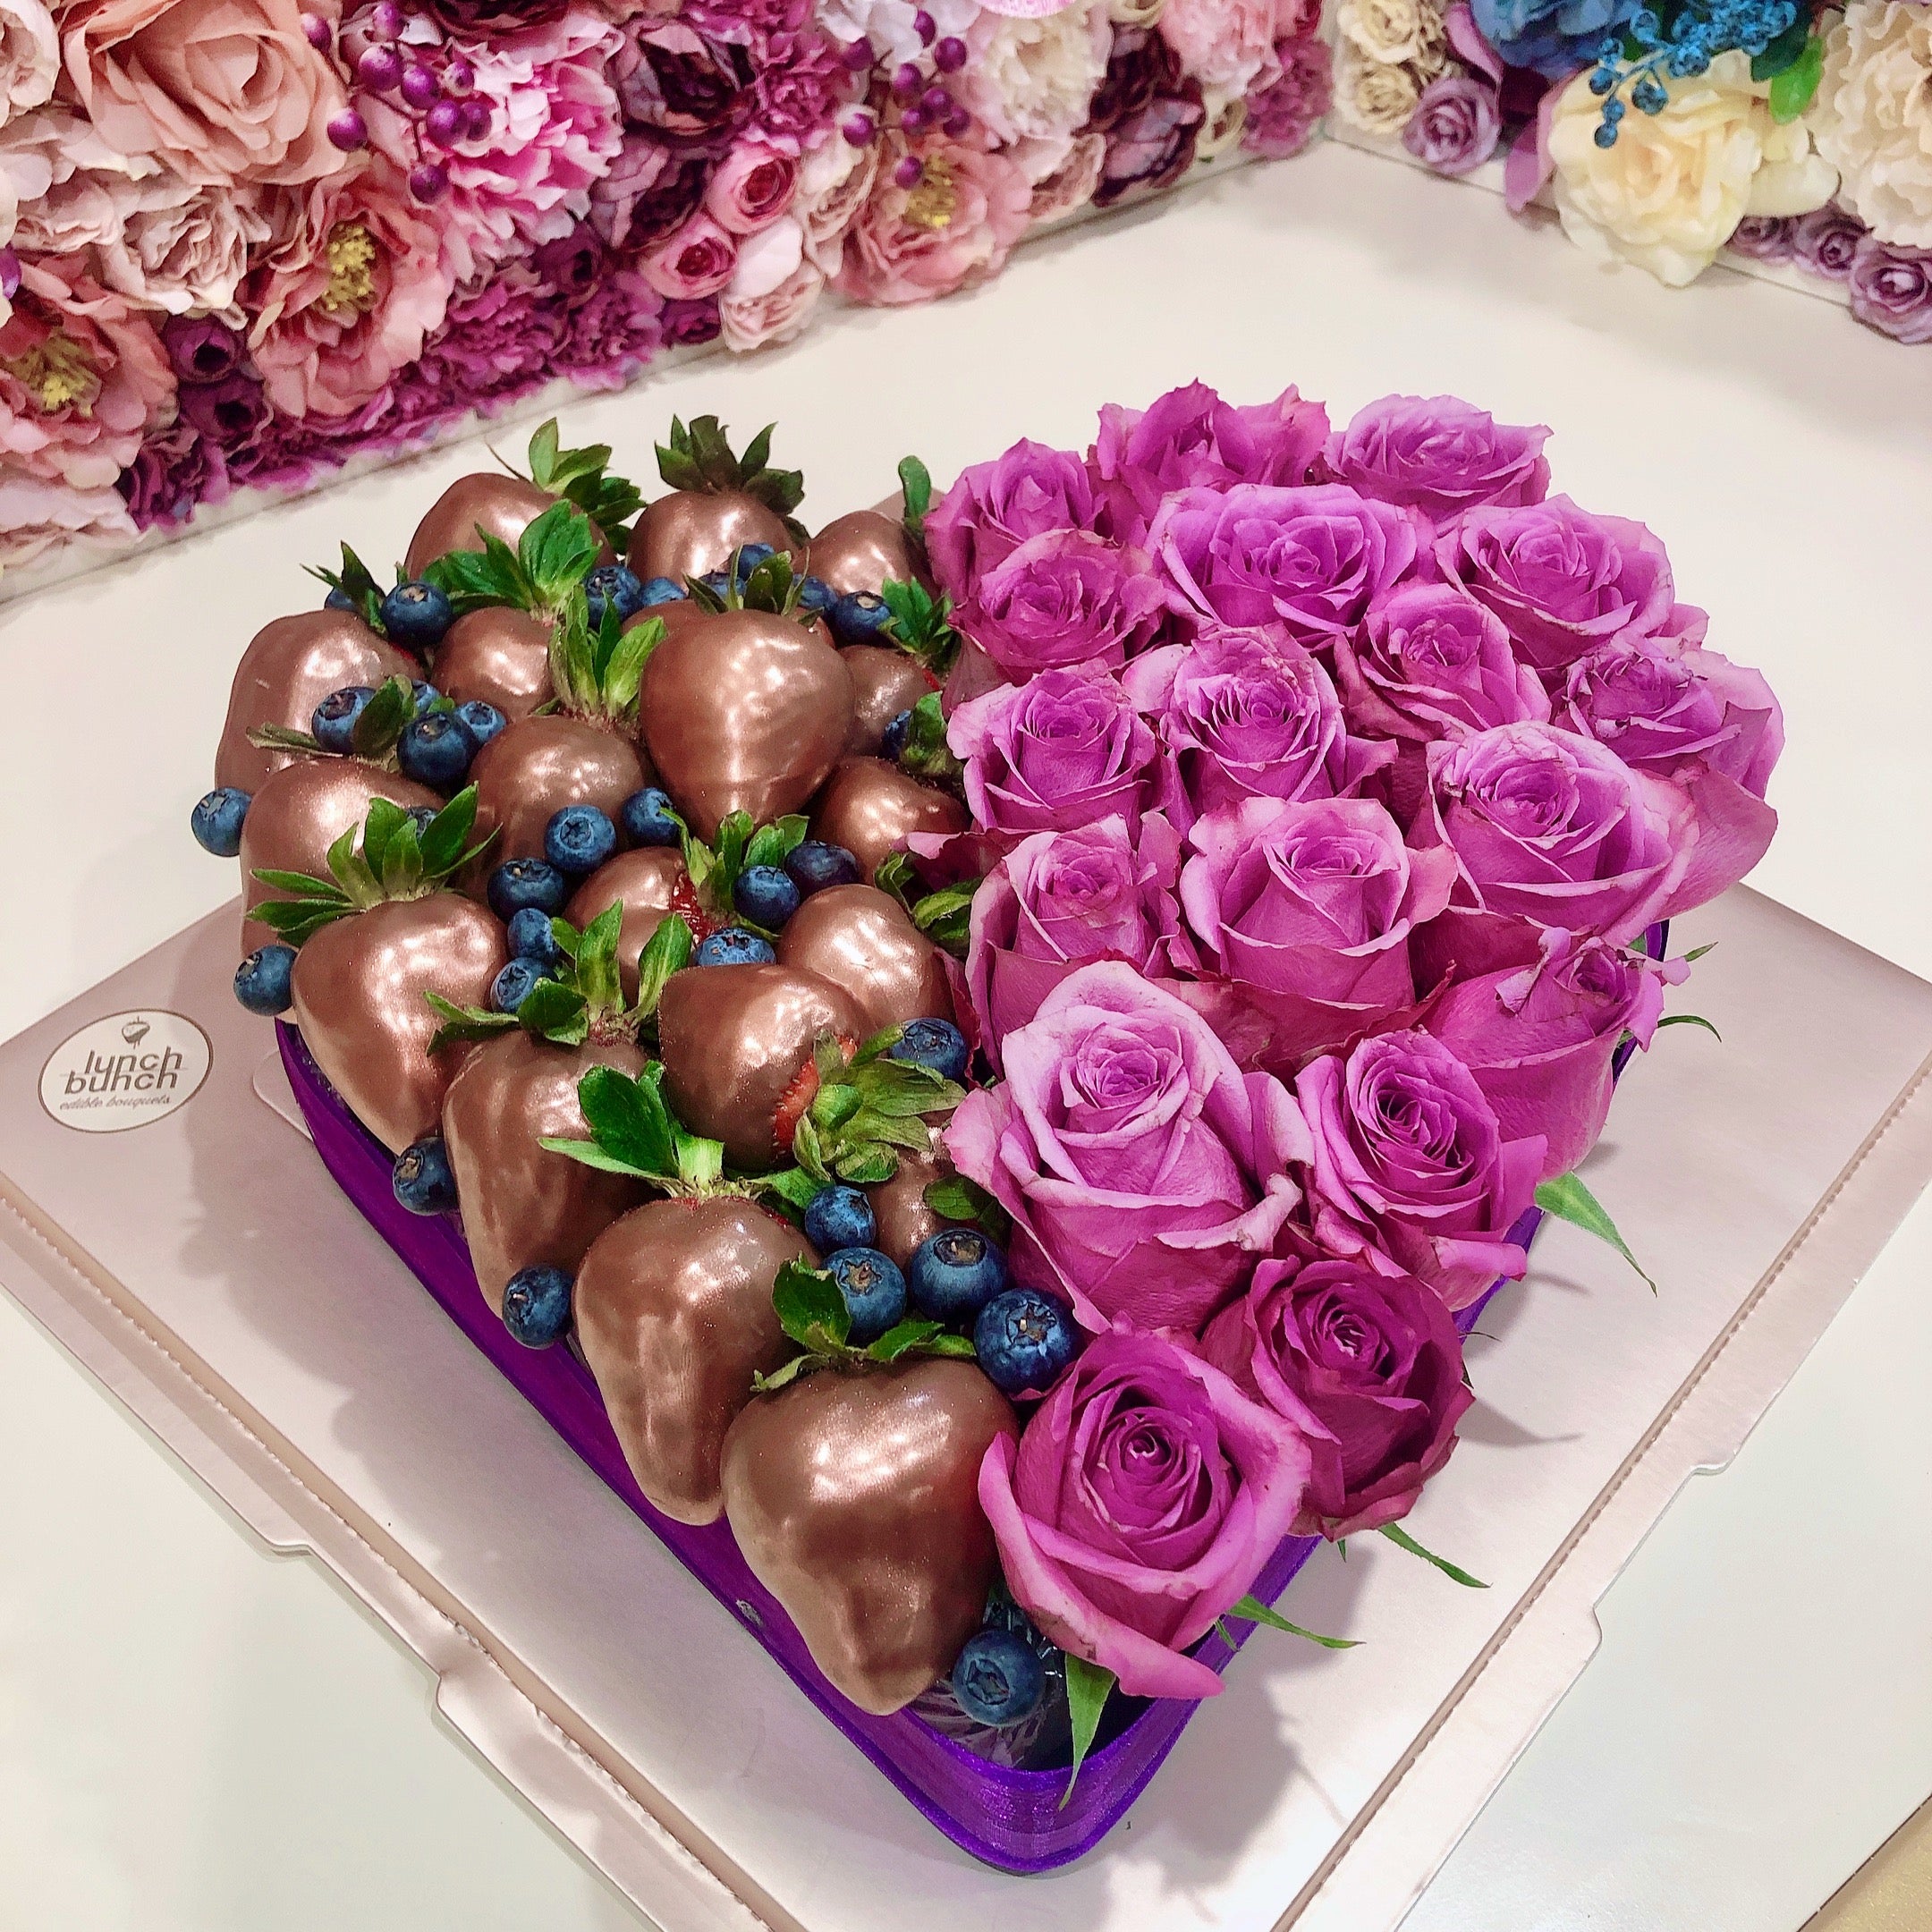 Love heart box half roses  and half chocolate covered strawberries, romantic gift of chocolate treats